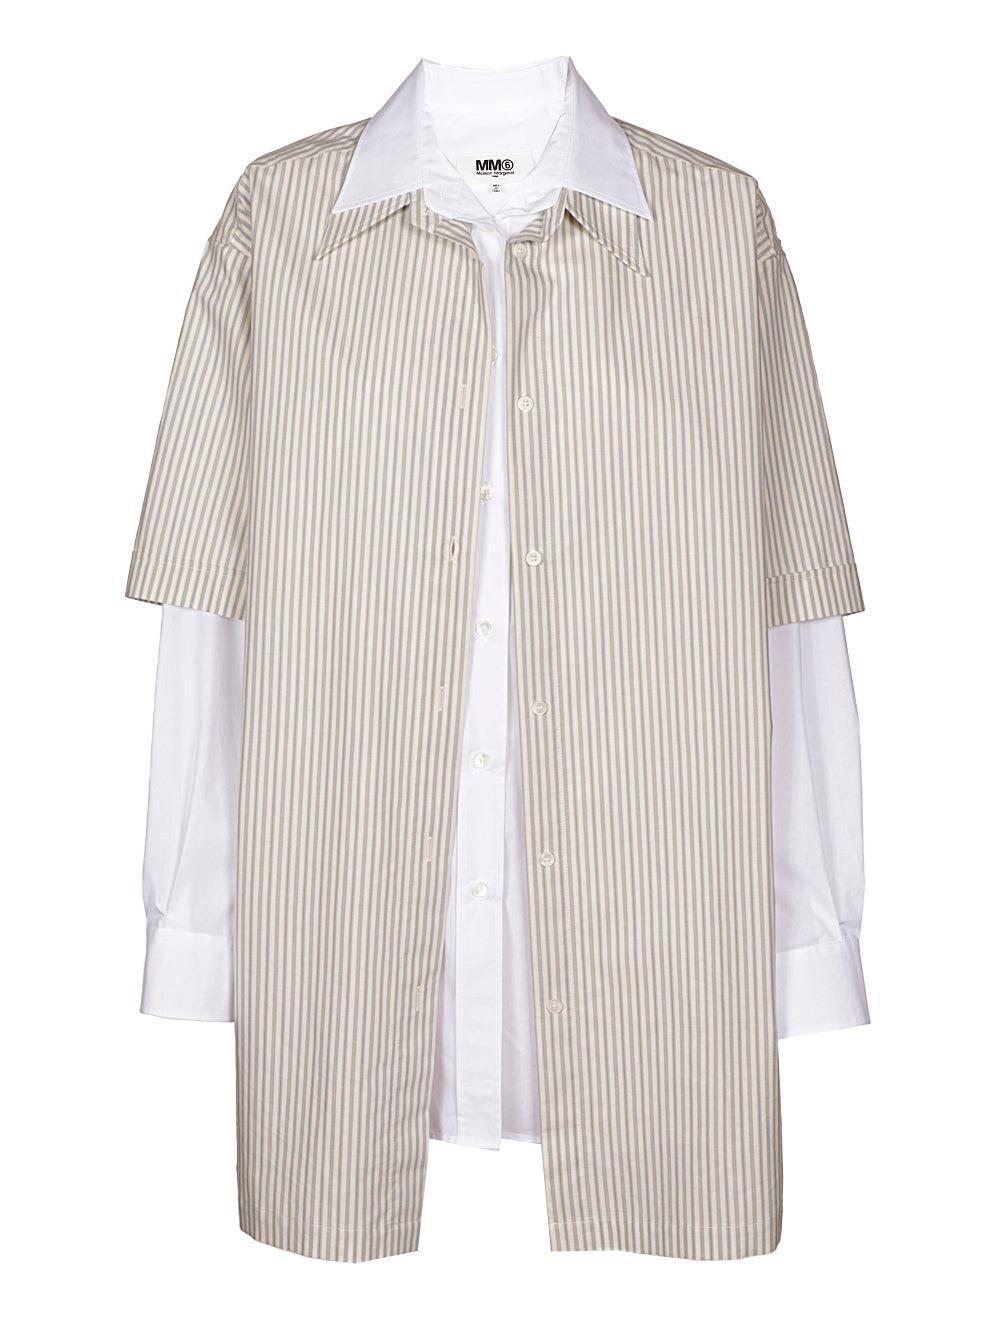 MM6 Maison Margiela Striped Layered Shirt